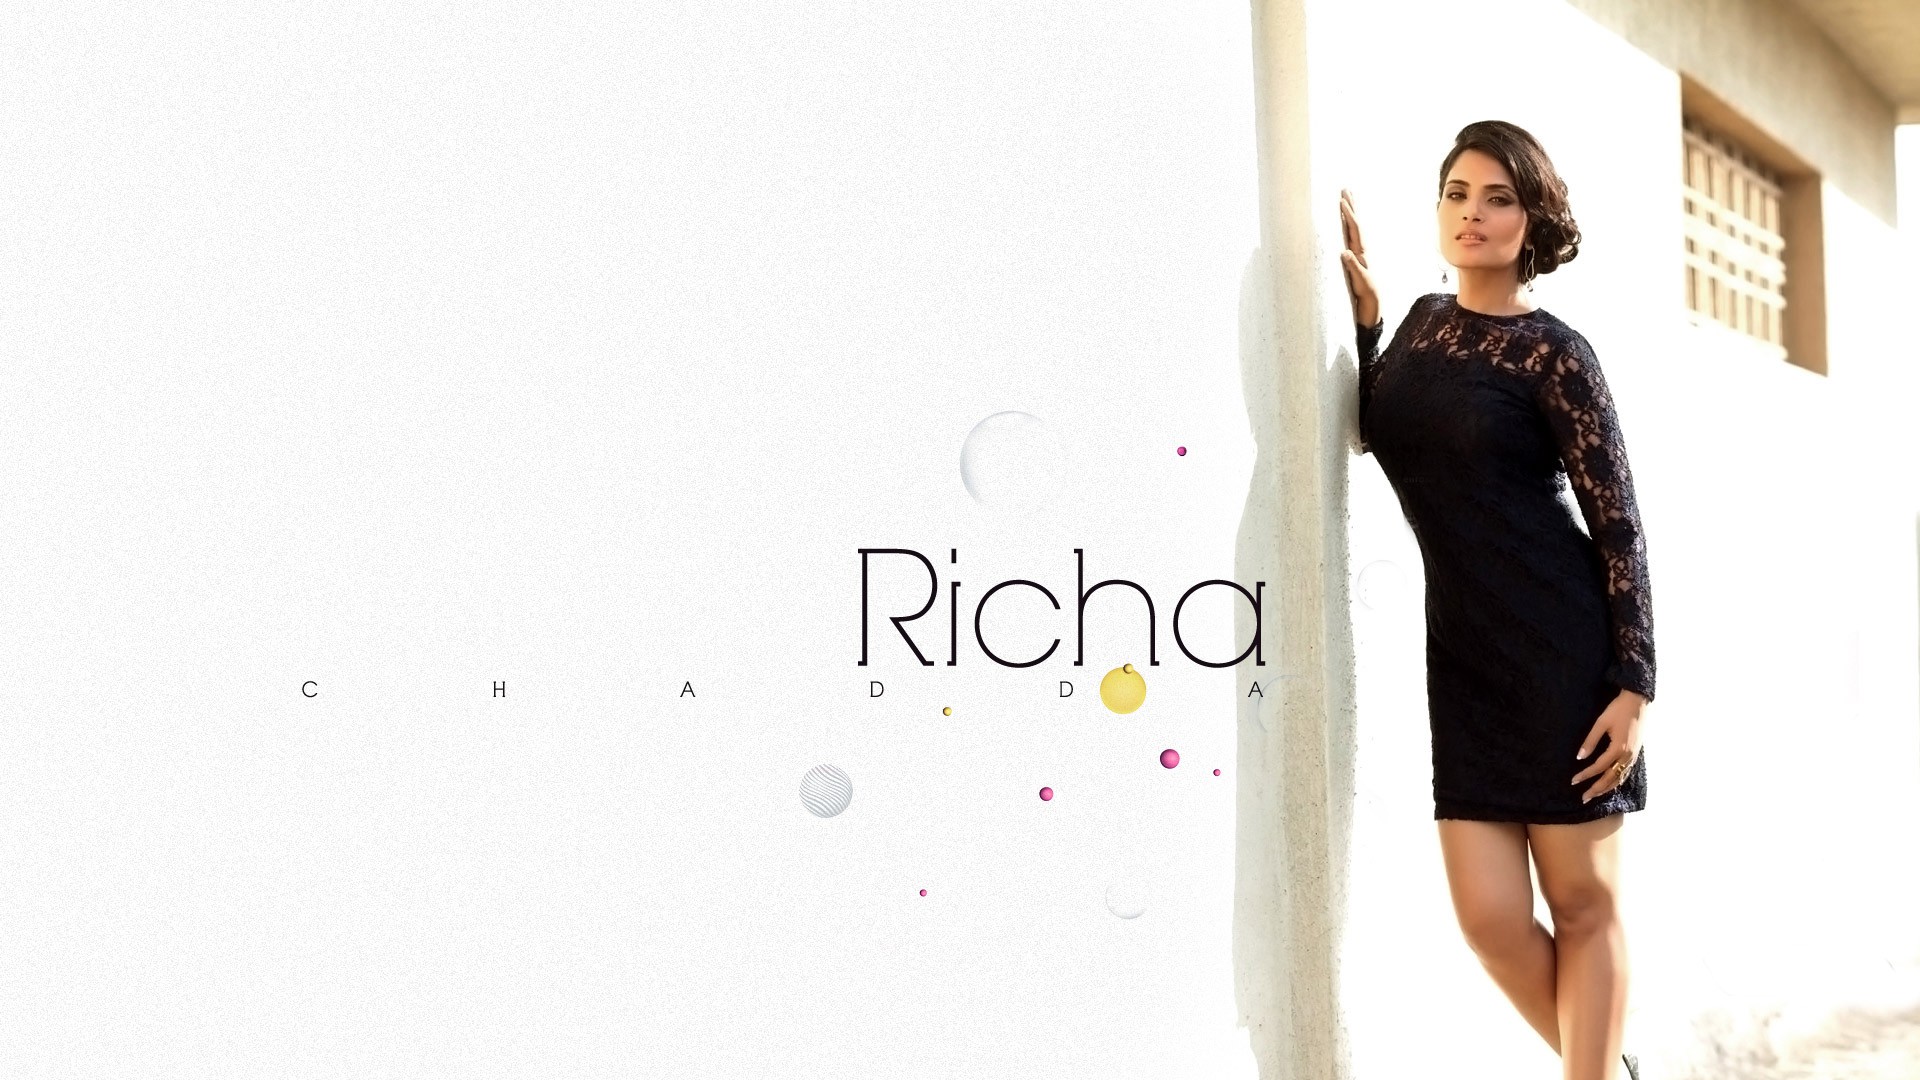 richa chadda in black dress celebrities photos